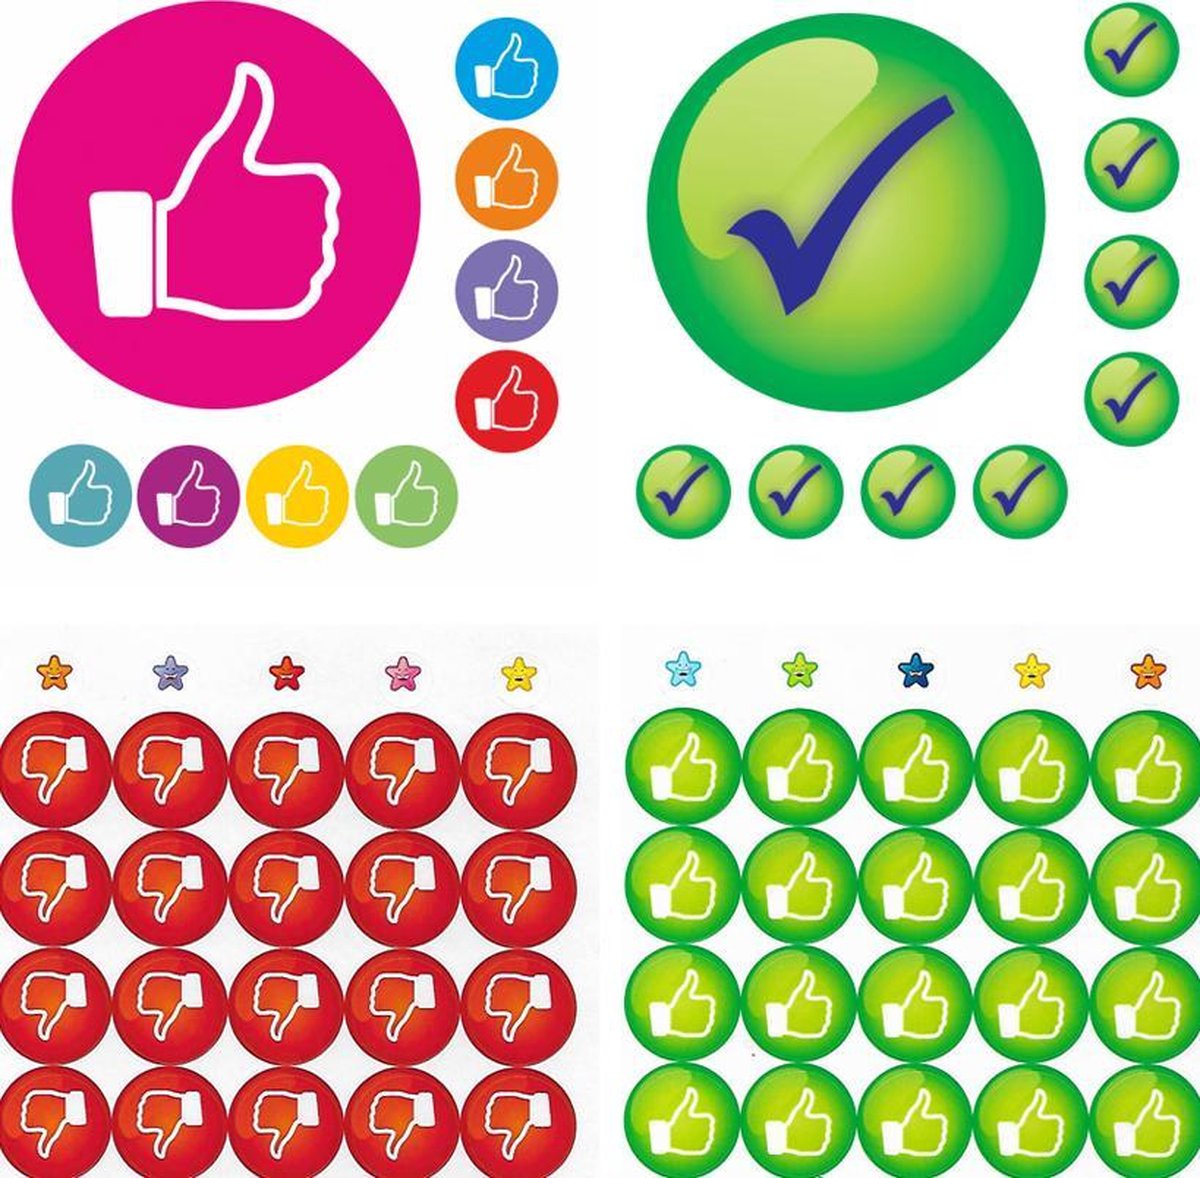 Westers Meisje Oneerlijkheid Beloningsstickers Set Groot Like - 4 x A5 vel 19mm stickers - Belonen met  stickers | bol.com